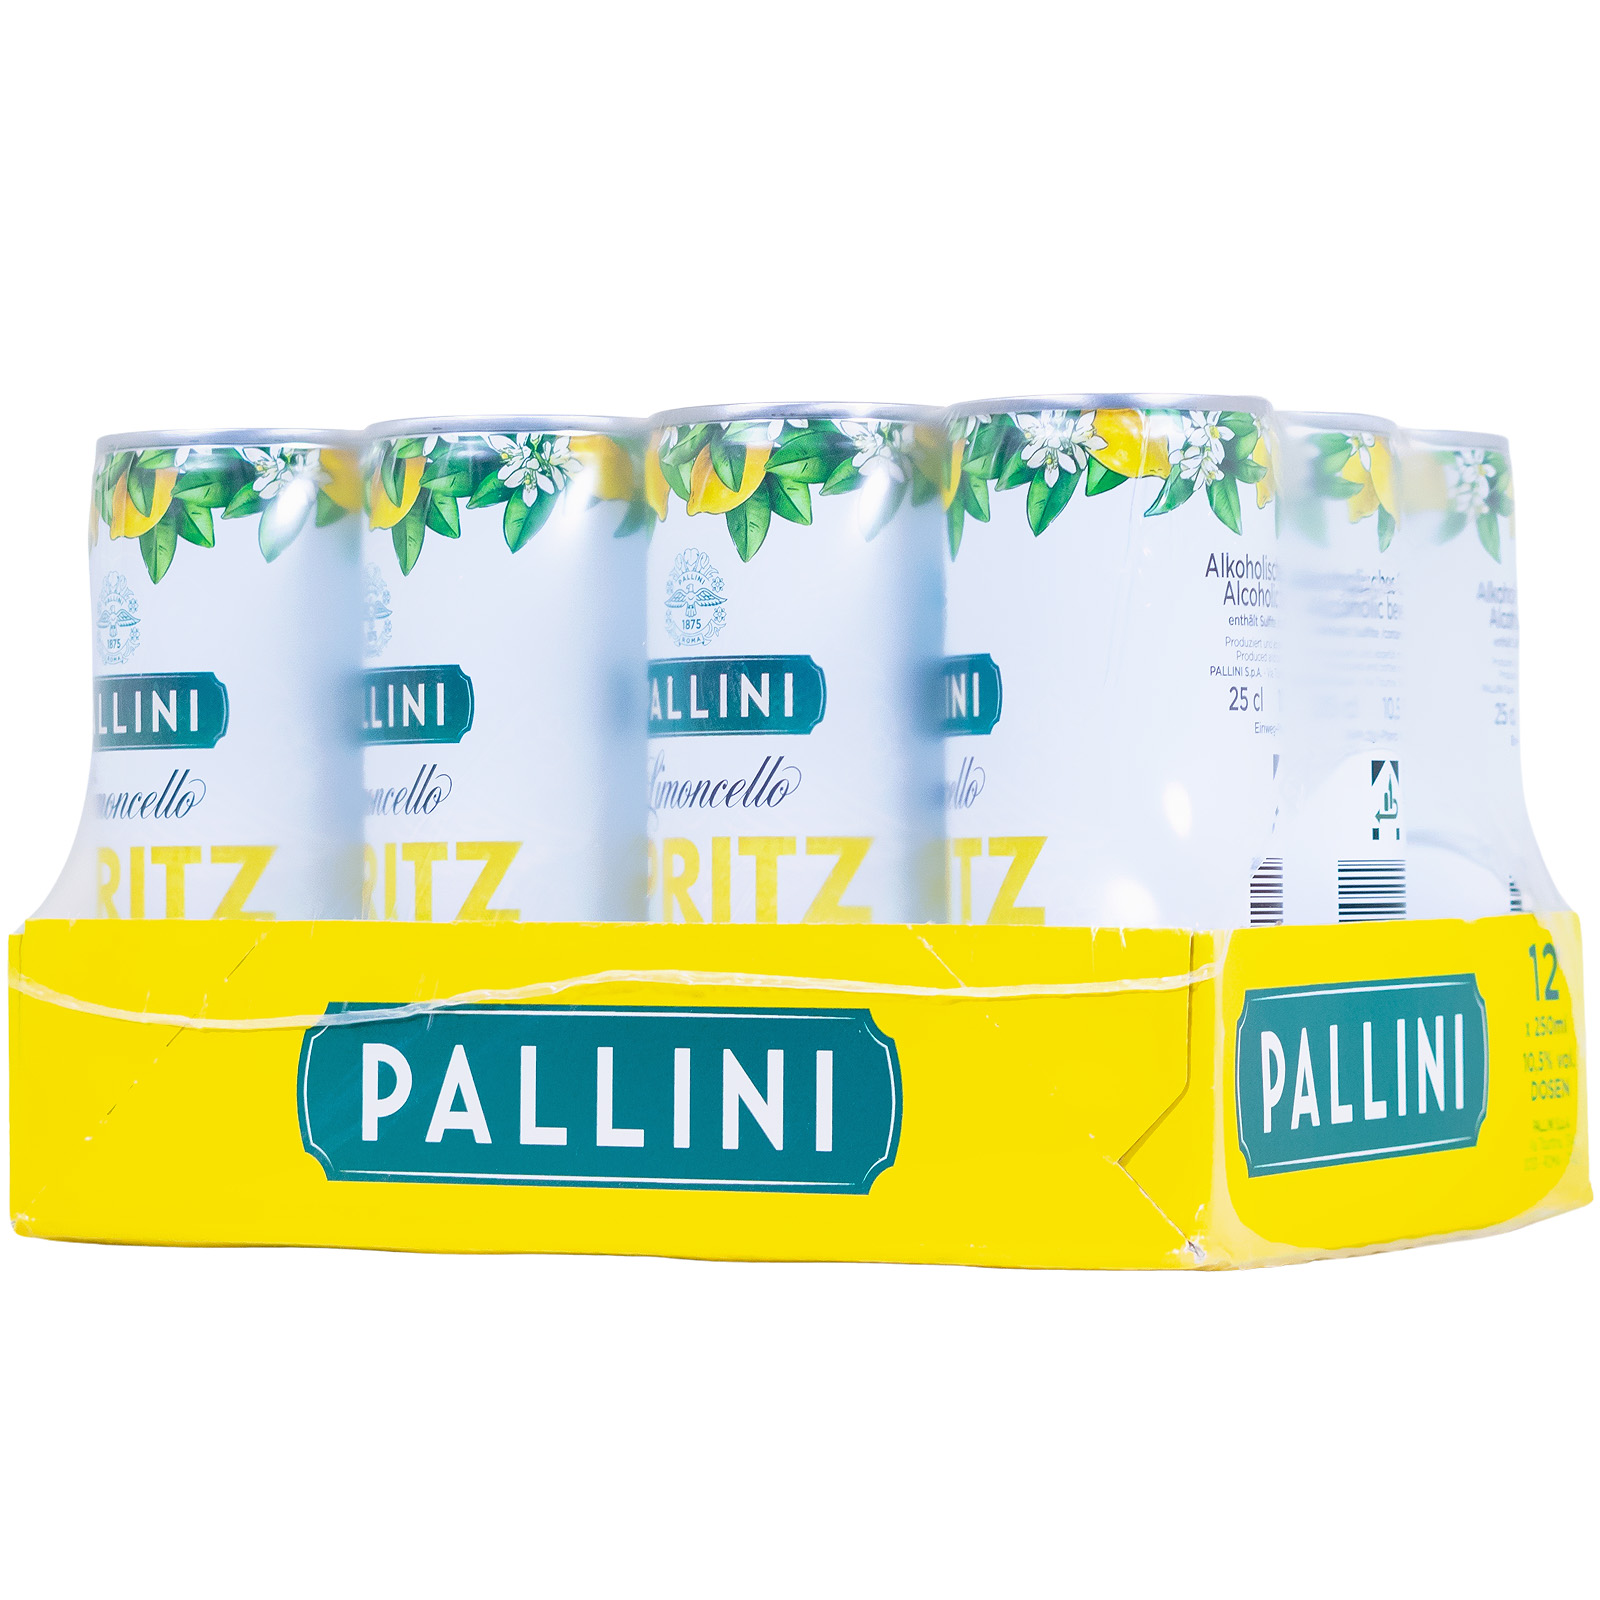 Paket [12 x 0,25L] Pallini Limoncello Spritz - 3L 10,5% vol